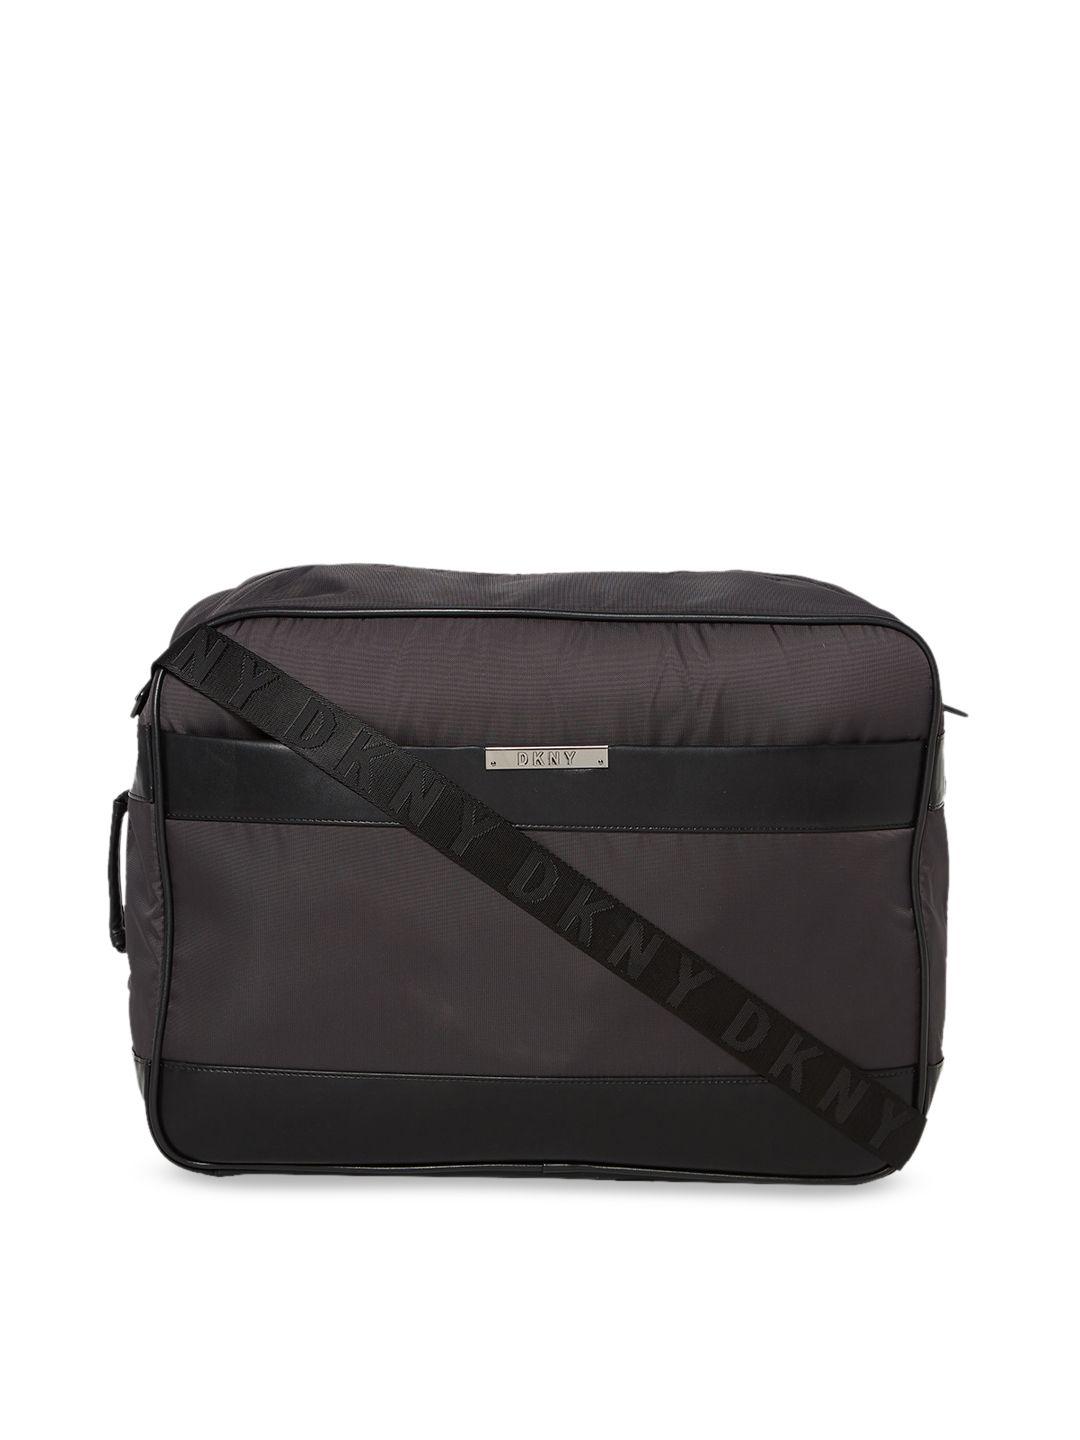 dkny mens ace soft medium size backpack